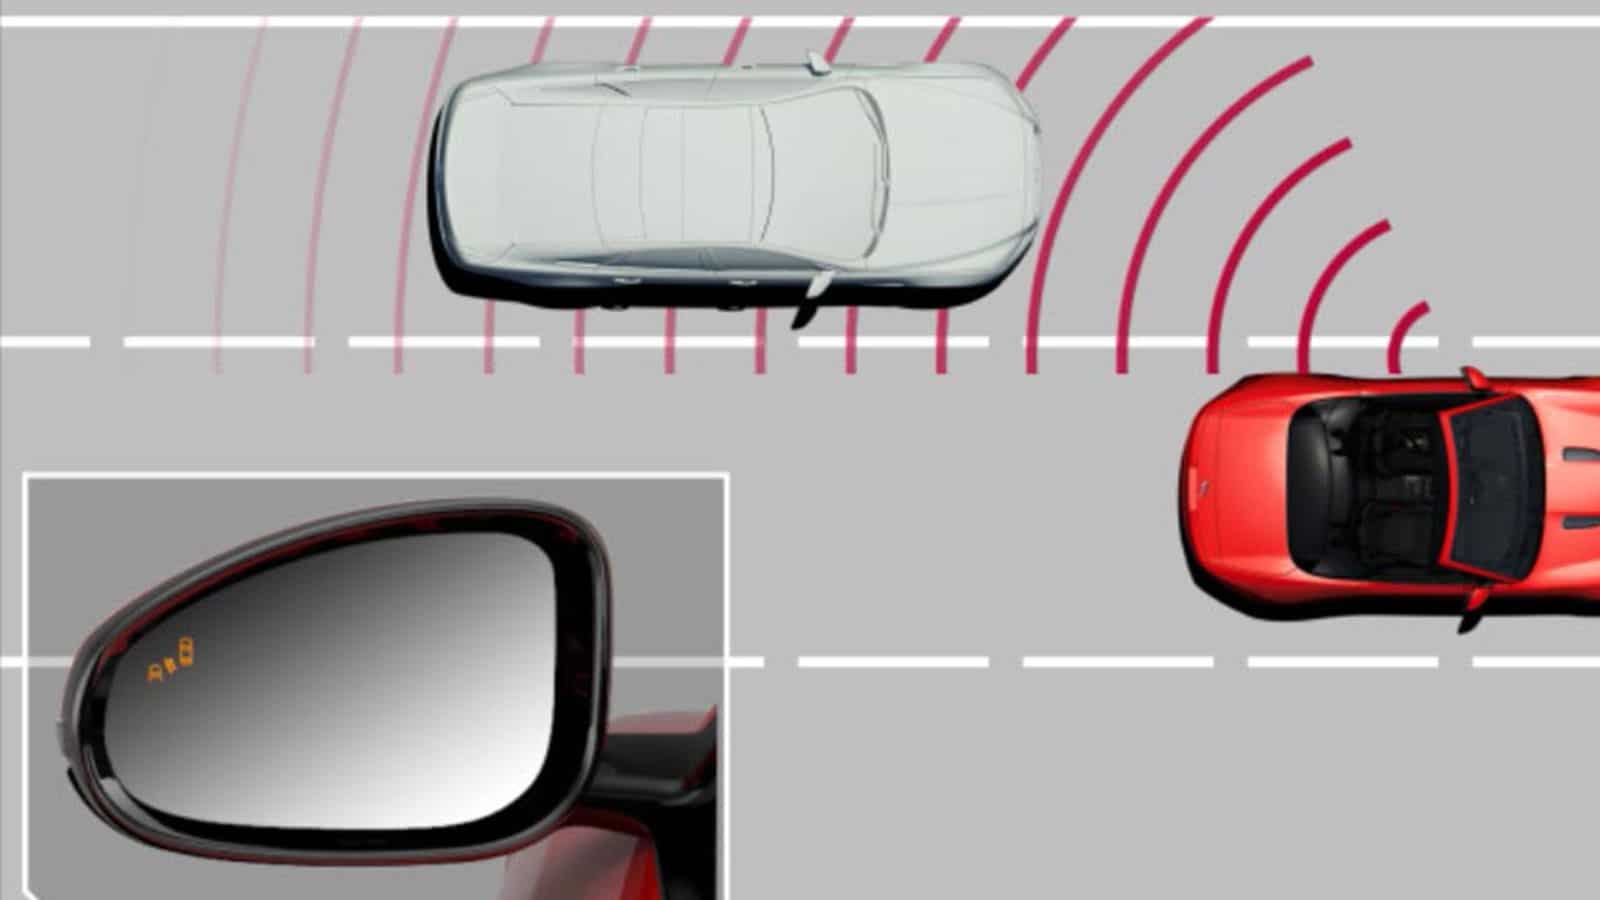 Diagram of Jaguar F-Type Blind Spot Monitoring Detetcting Other Vehicles